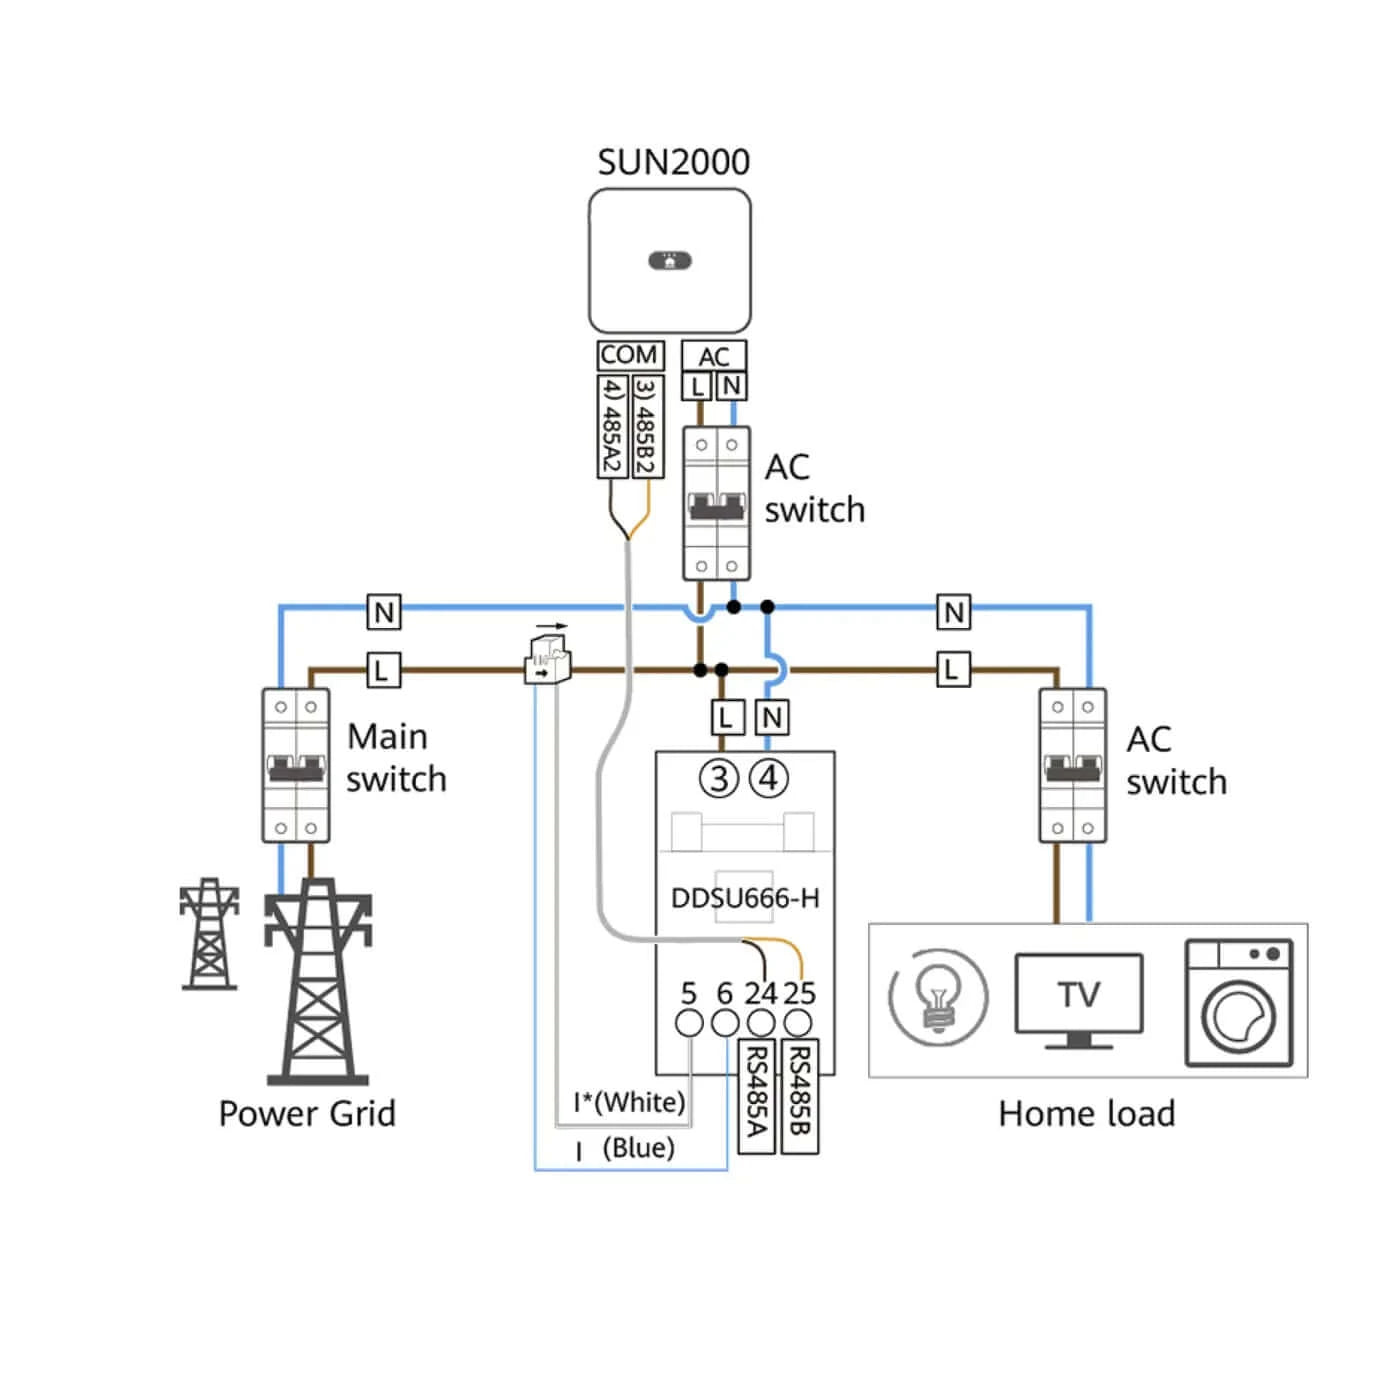 Smart Power Sensor Huawei DTSU666-H Diagramm 02